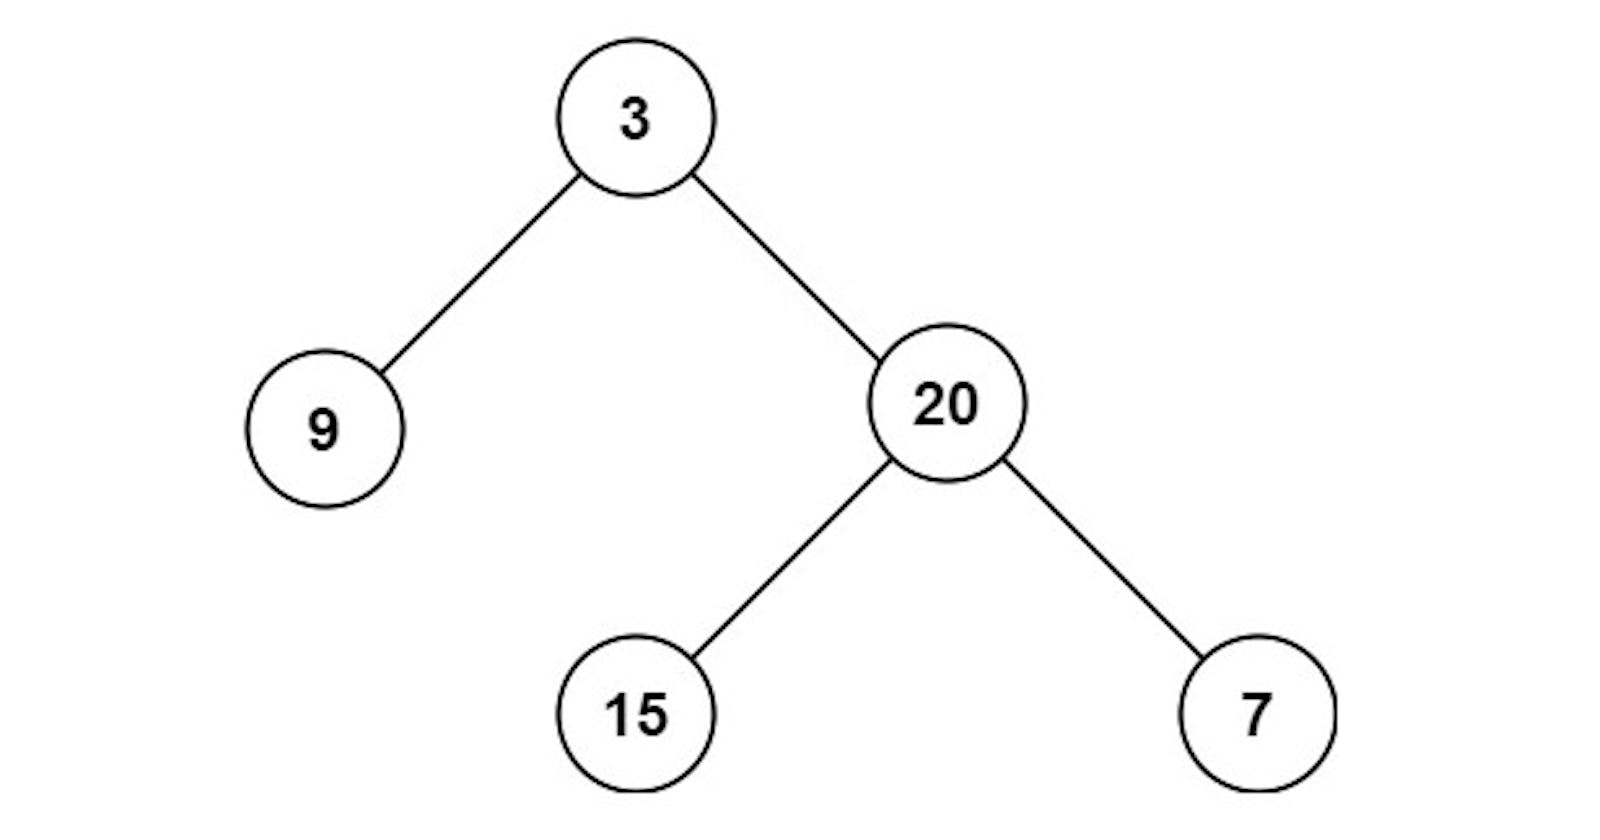 How to solve Leetcode 104. Maximum Depth of Binary Tree